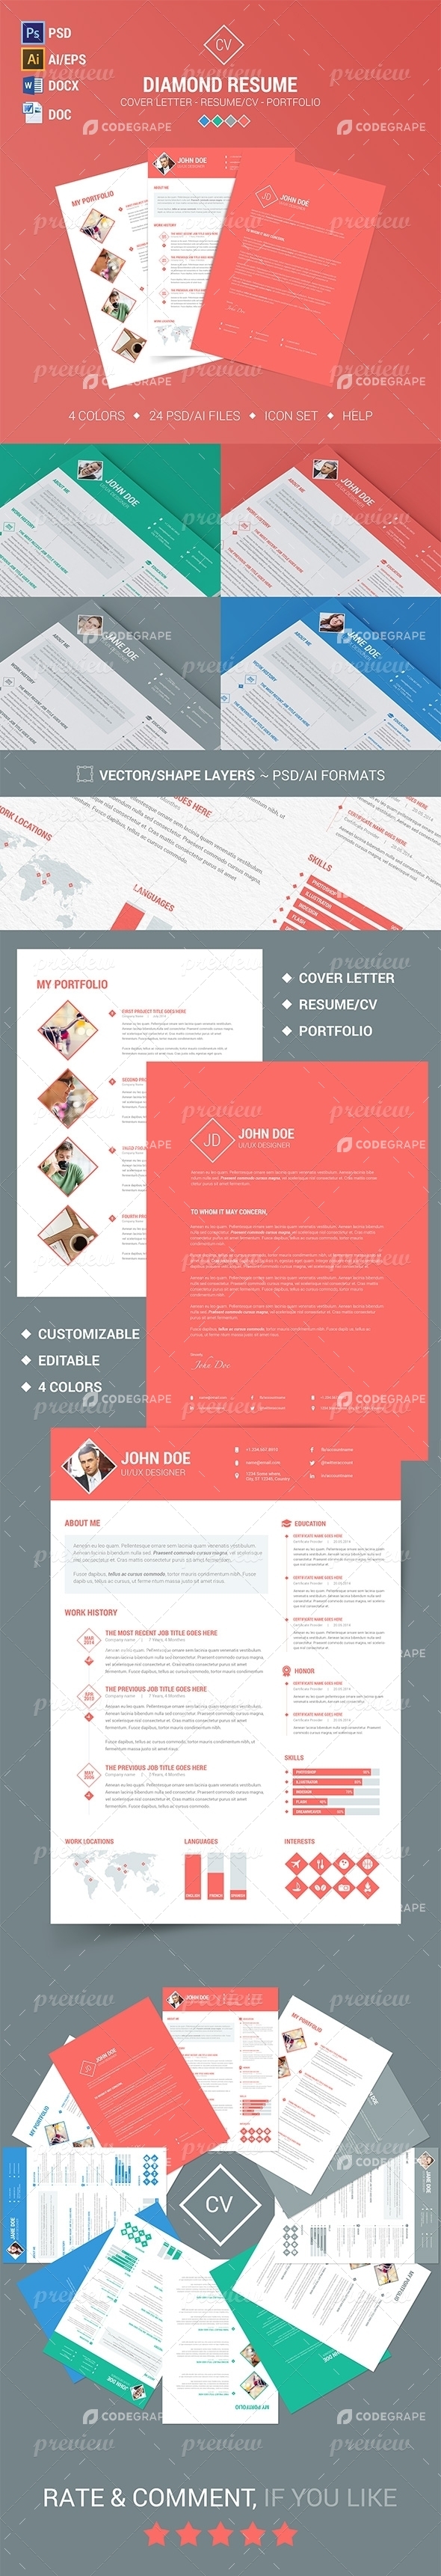 Diamond Resume/CV | 3 Piece | 4 Color | Cover Letter - Resume - Portfolio